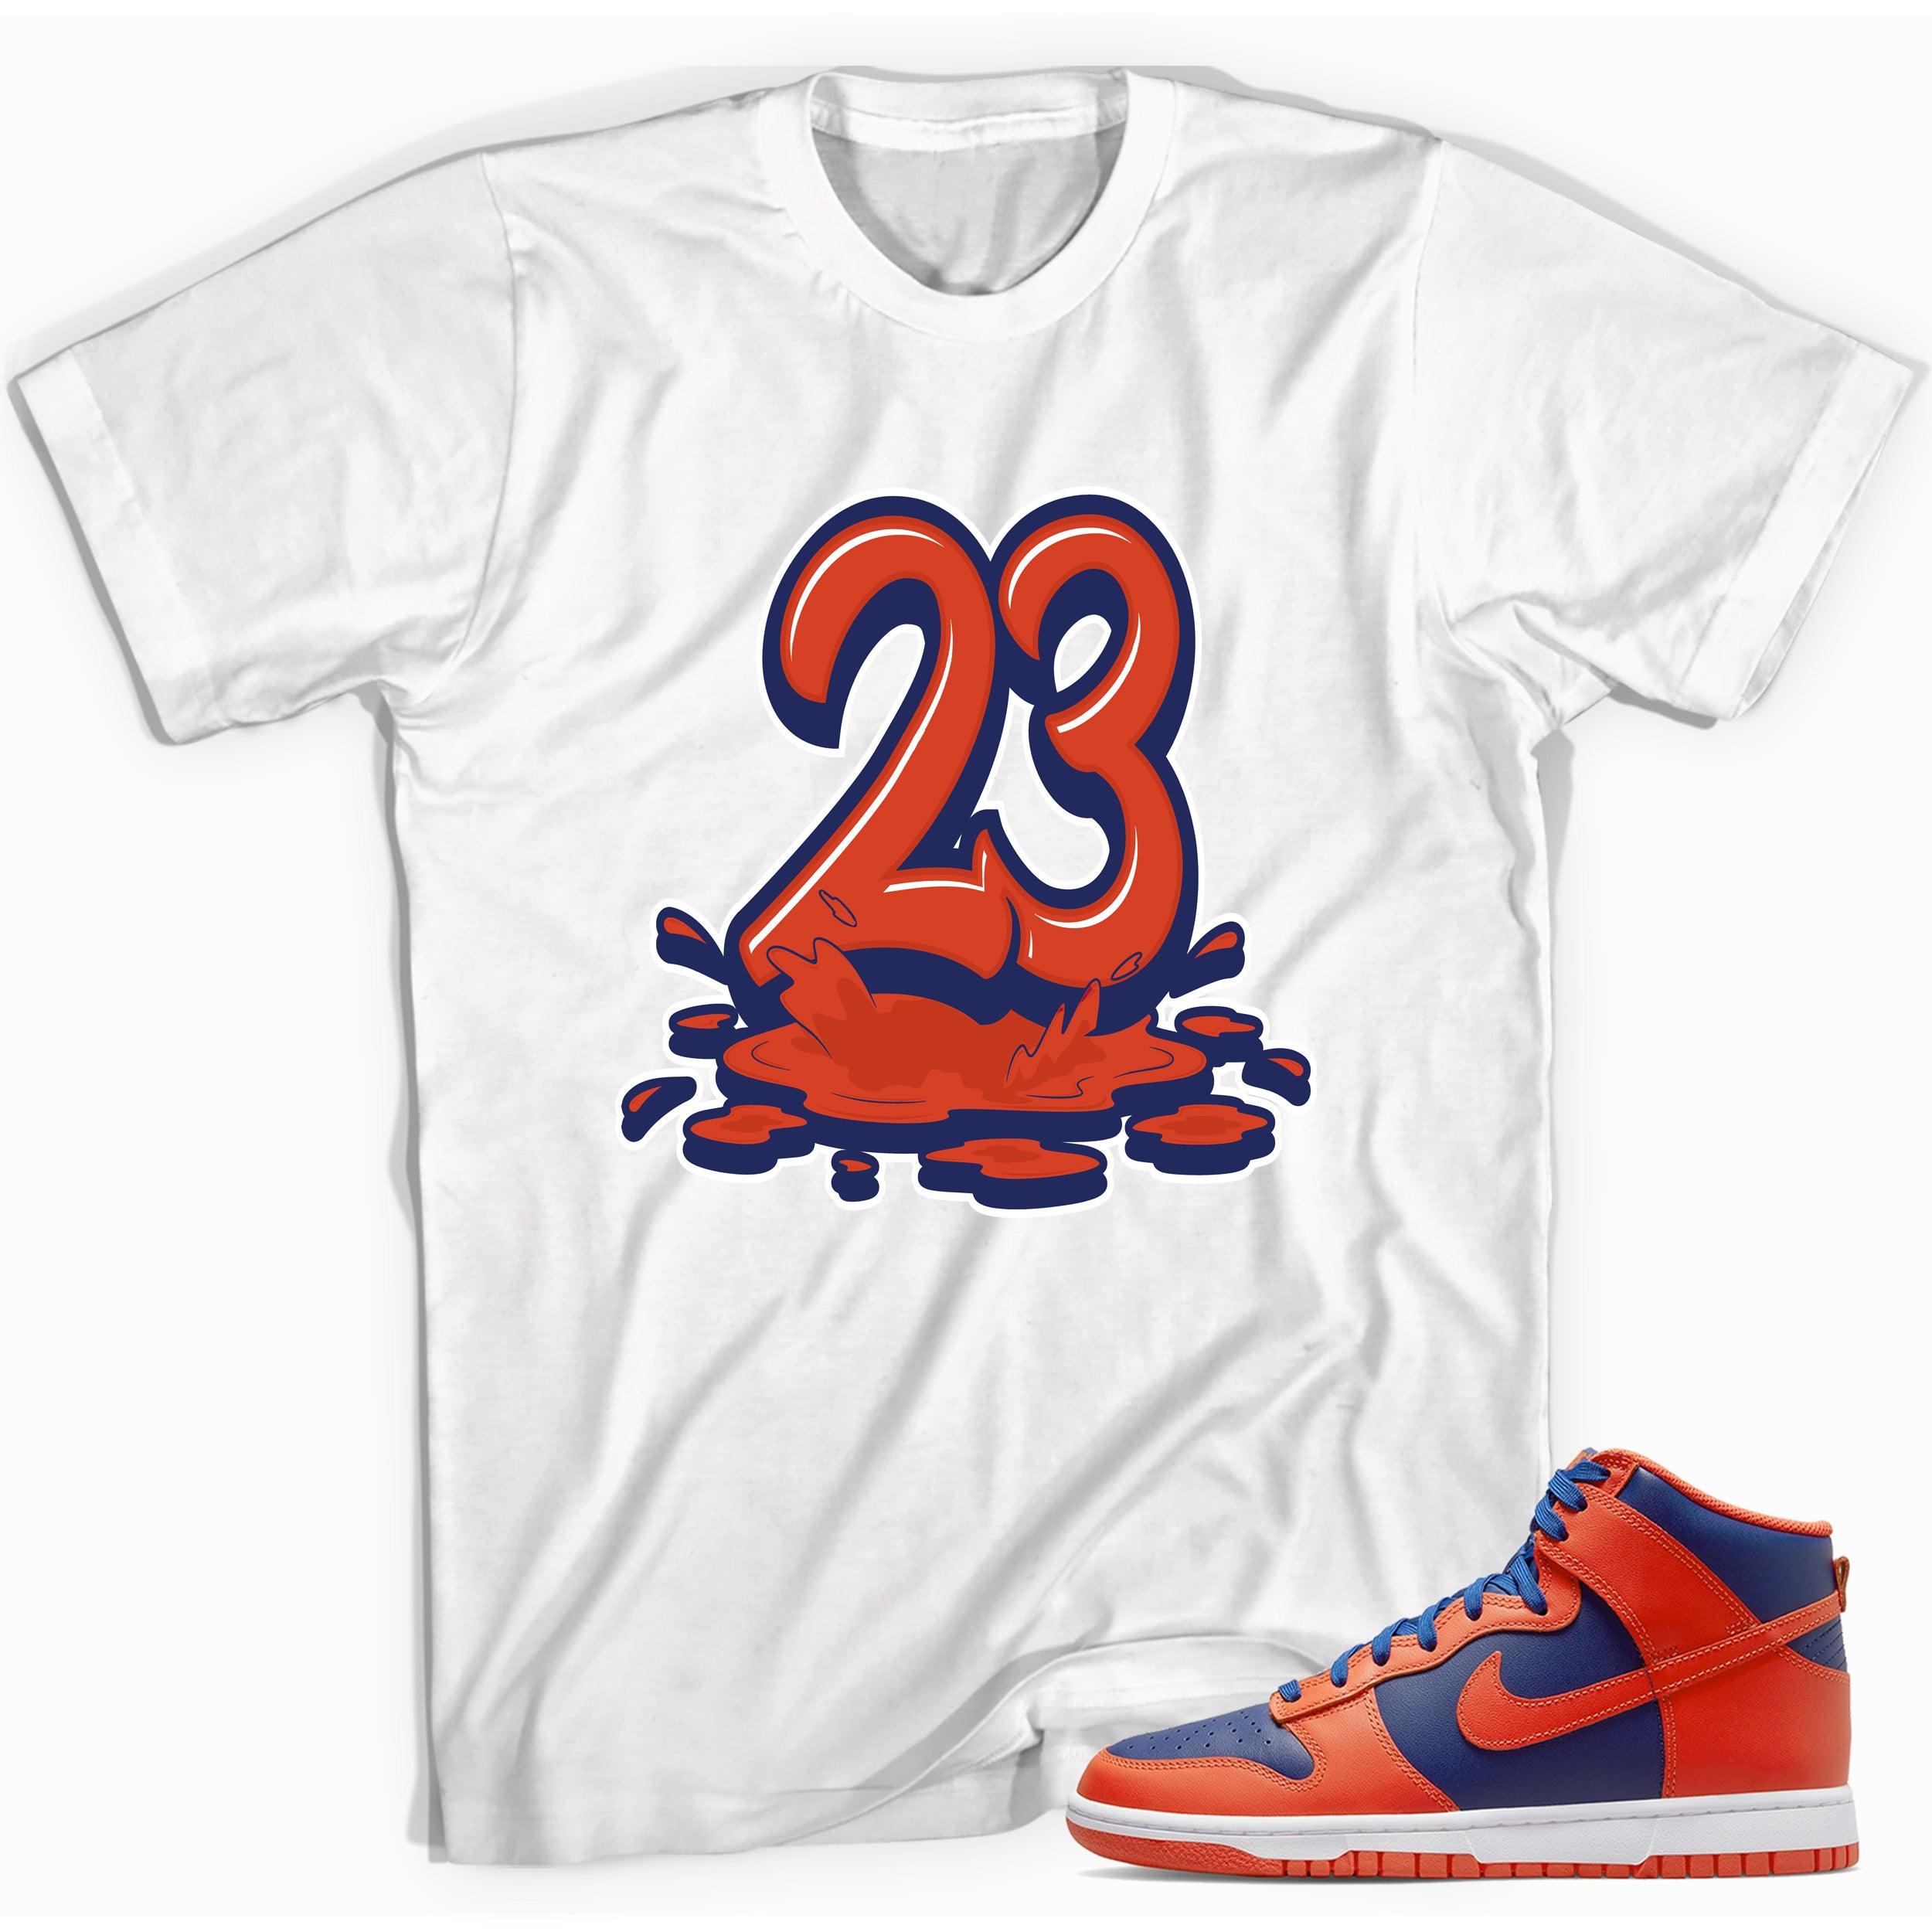 Number 23 Melting Shirt Nike Dunk High Knicks photo